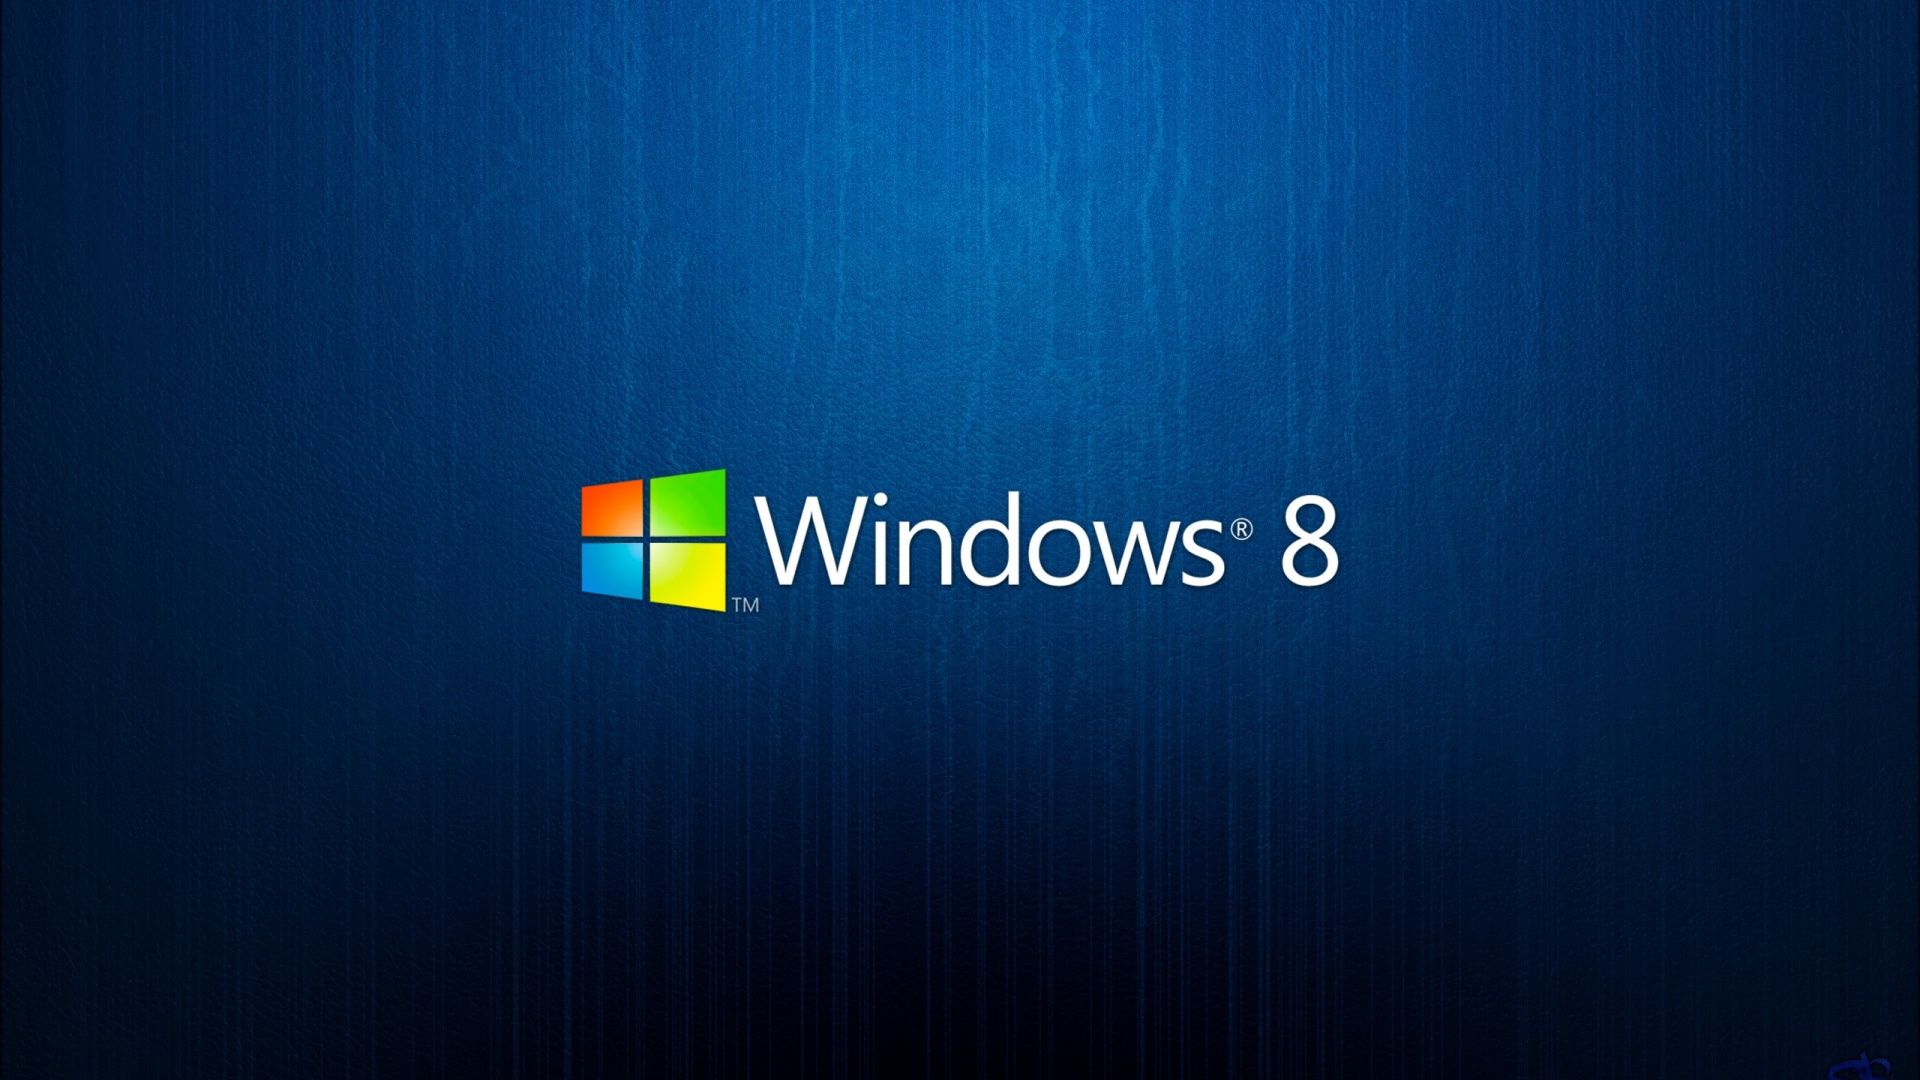 Windows 8 Desktop - wallpaper.